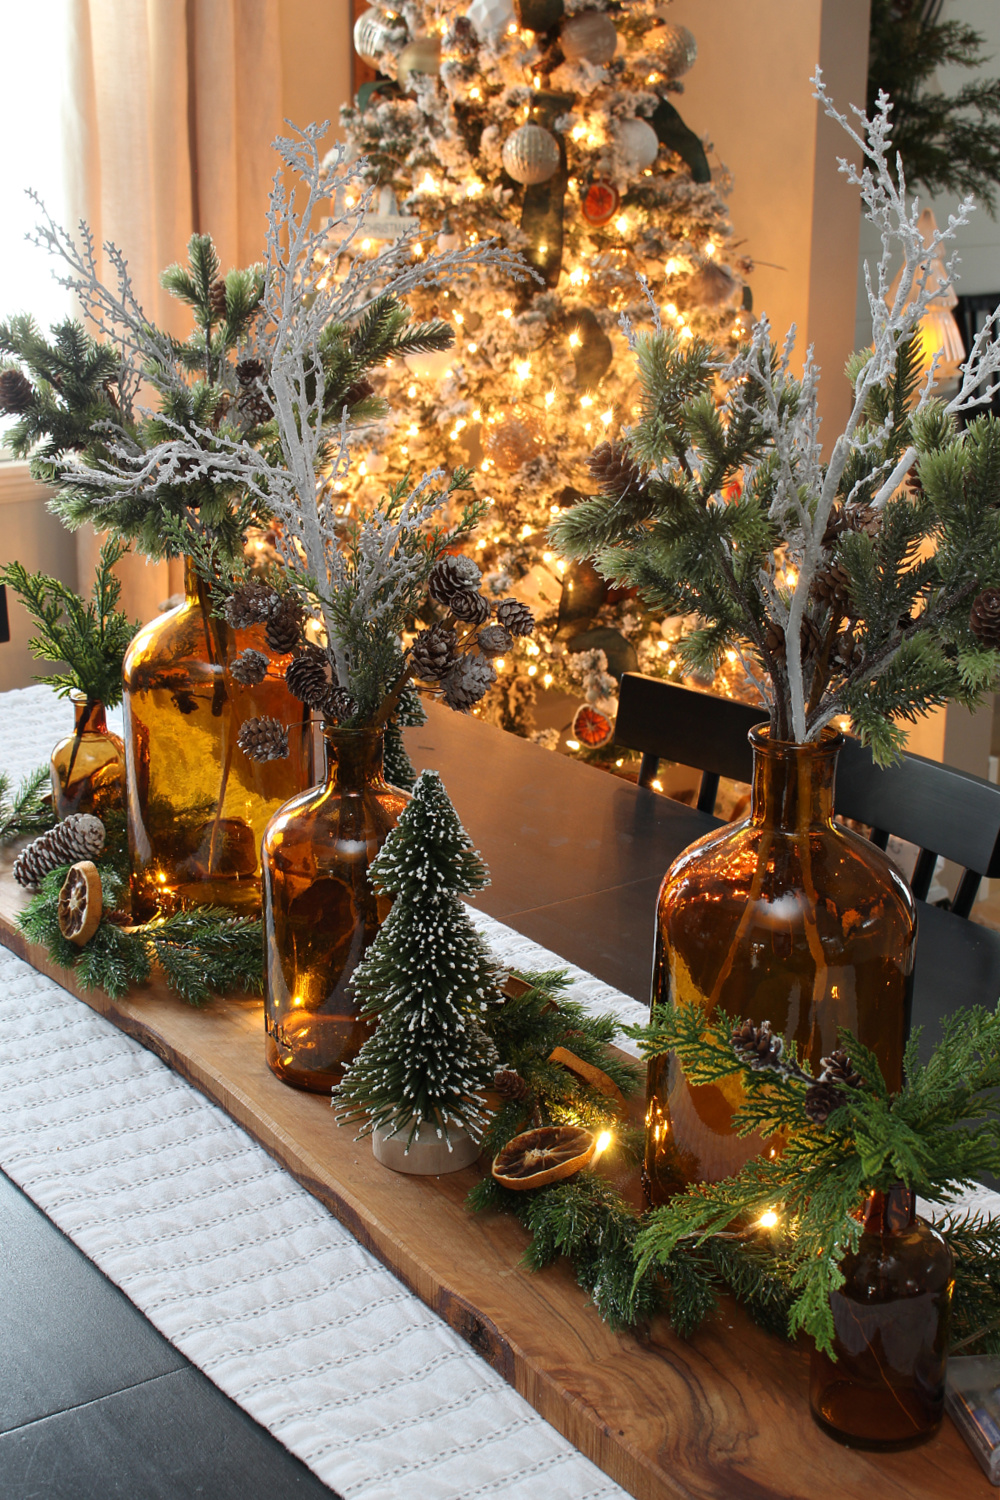 Amber glass centerpiece illuminated by Christmas lights.